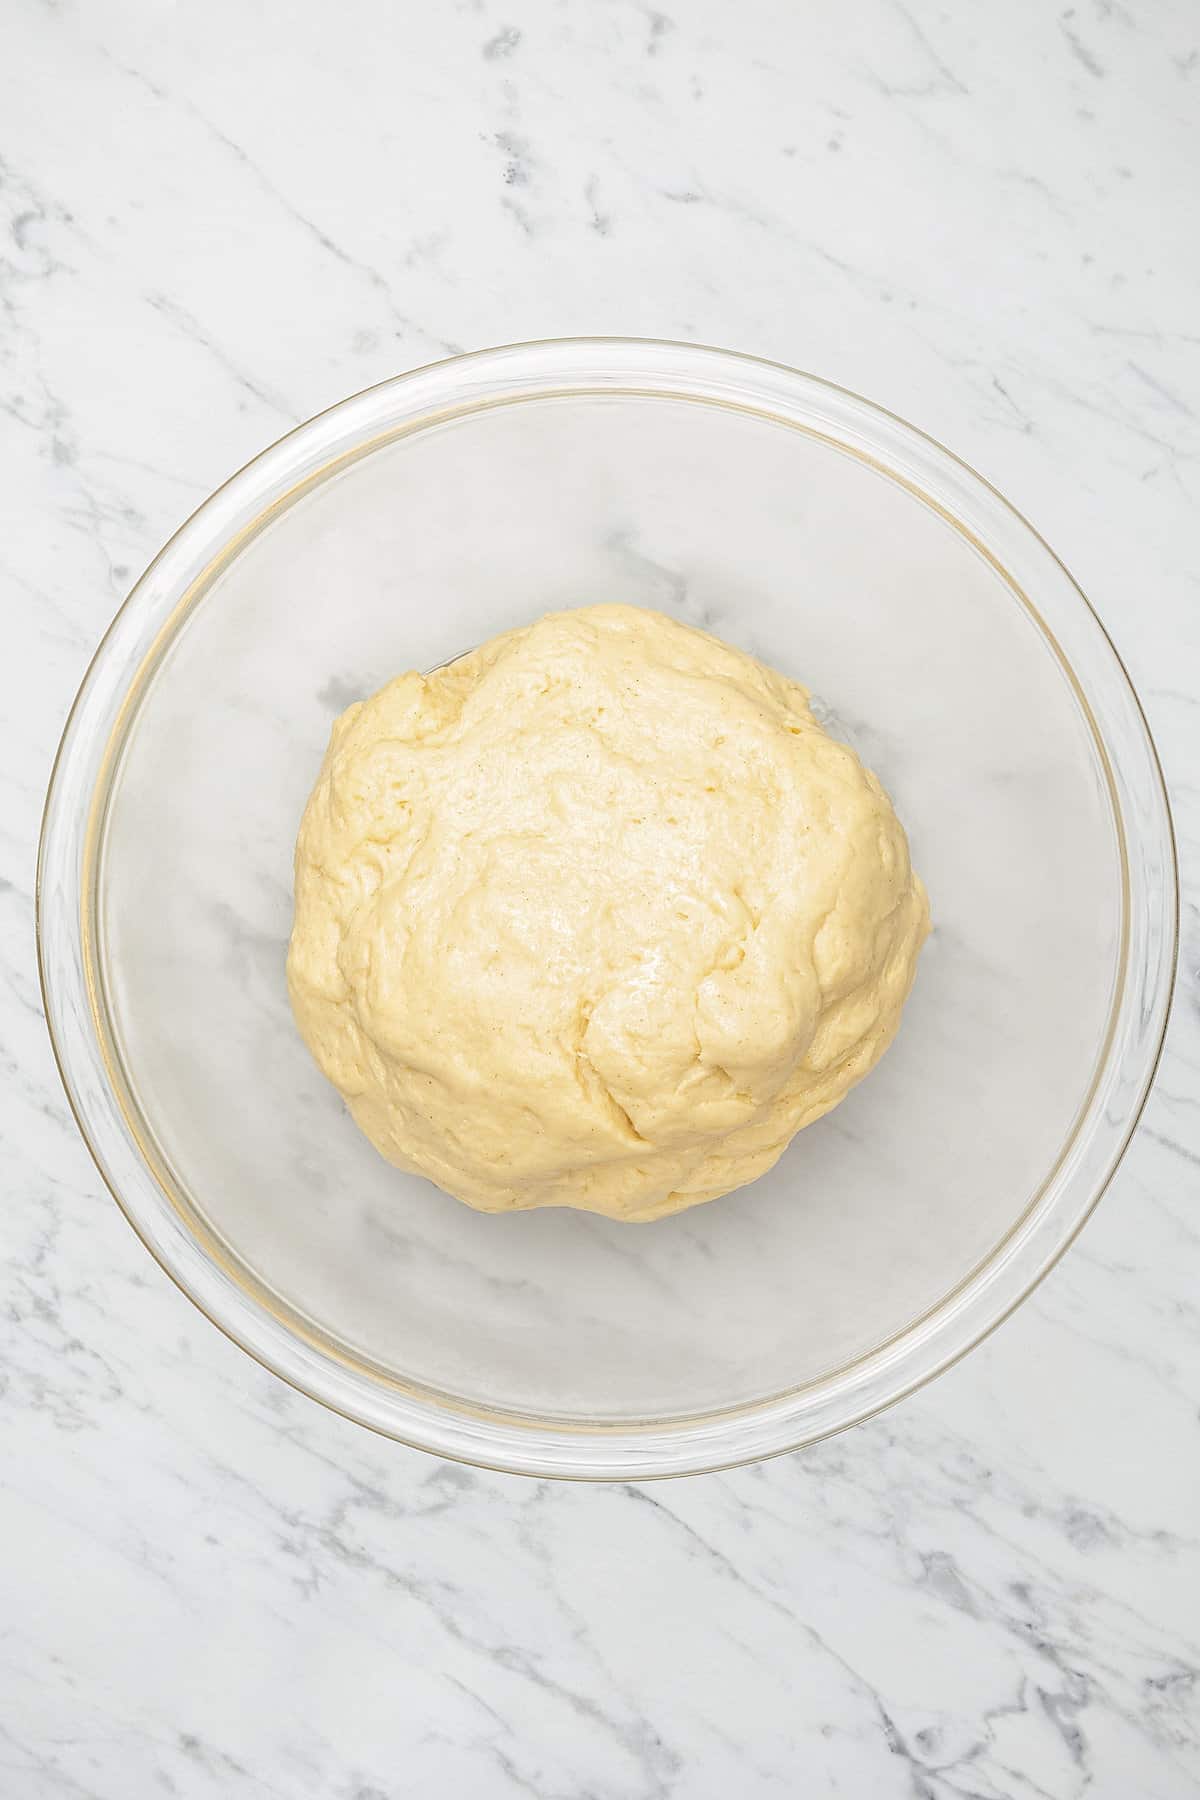 Honey bun dough after rising in a glass bowl.